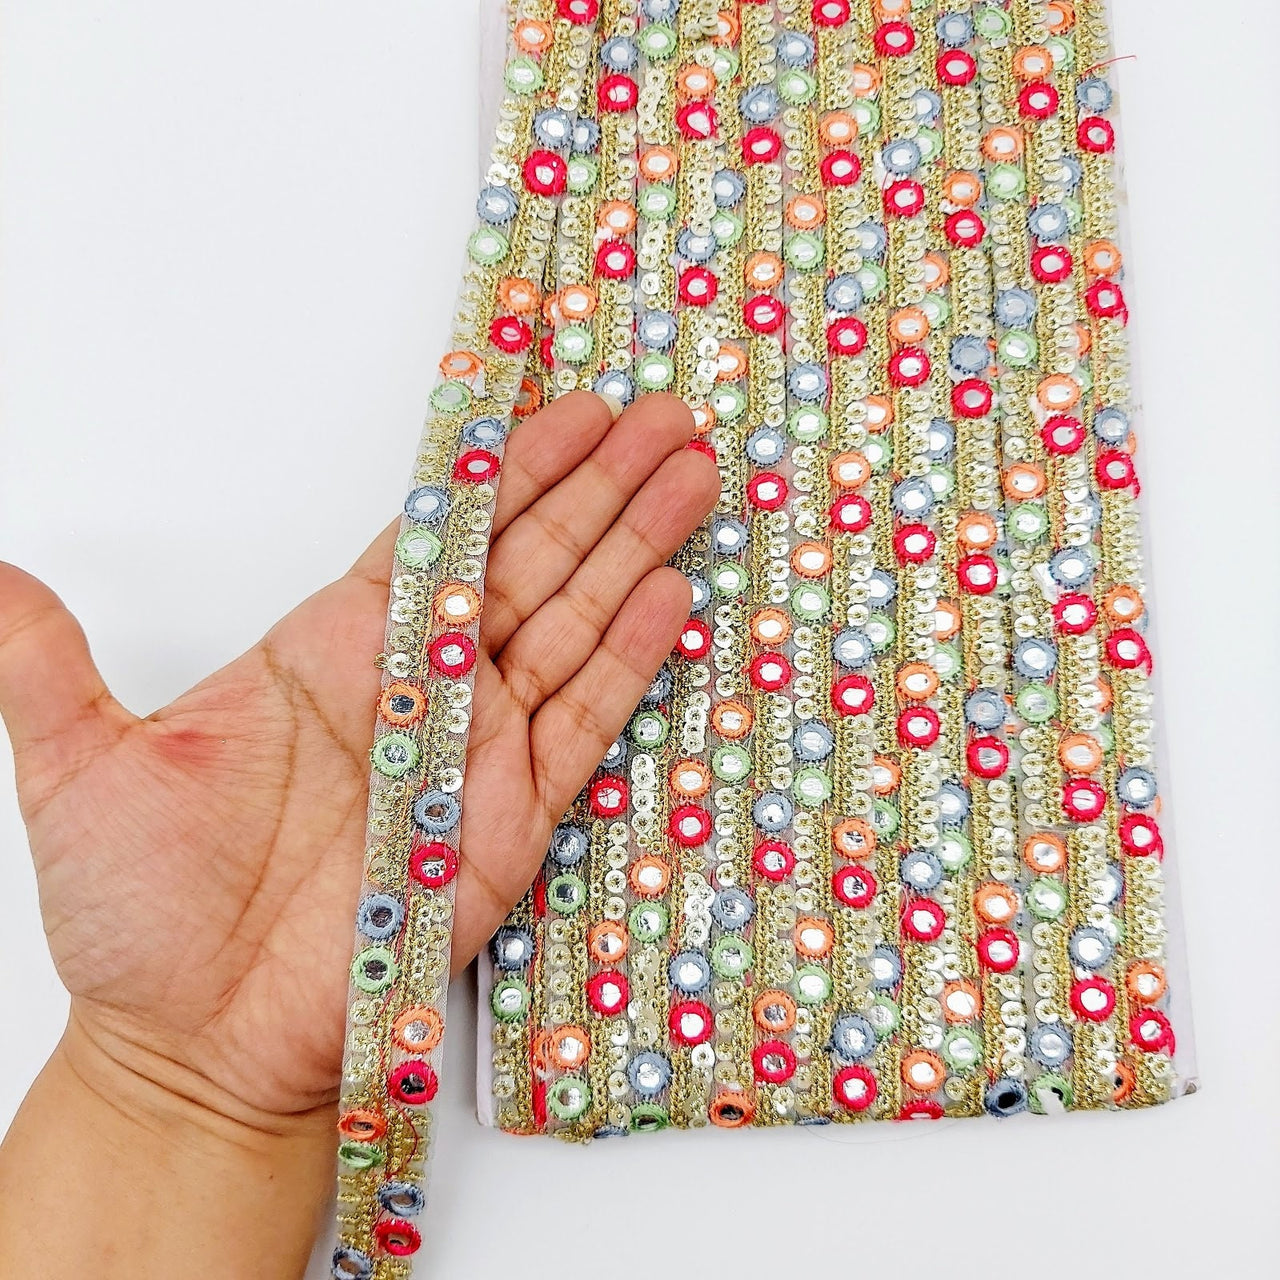 Embroidered Trim Sequins Trim 3 Yards Decorative Lace Sari Border Costume Ribbon Crafting Sewing Tape